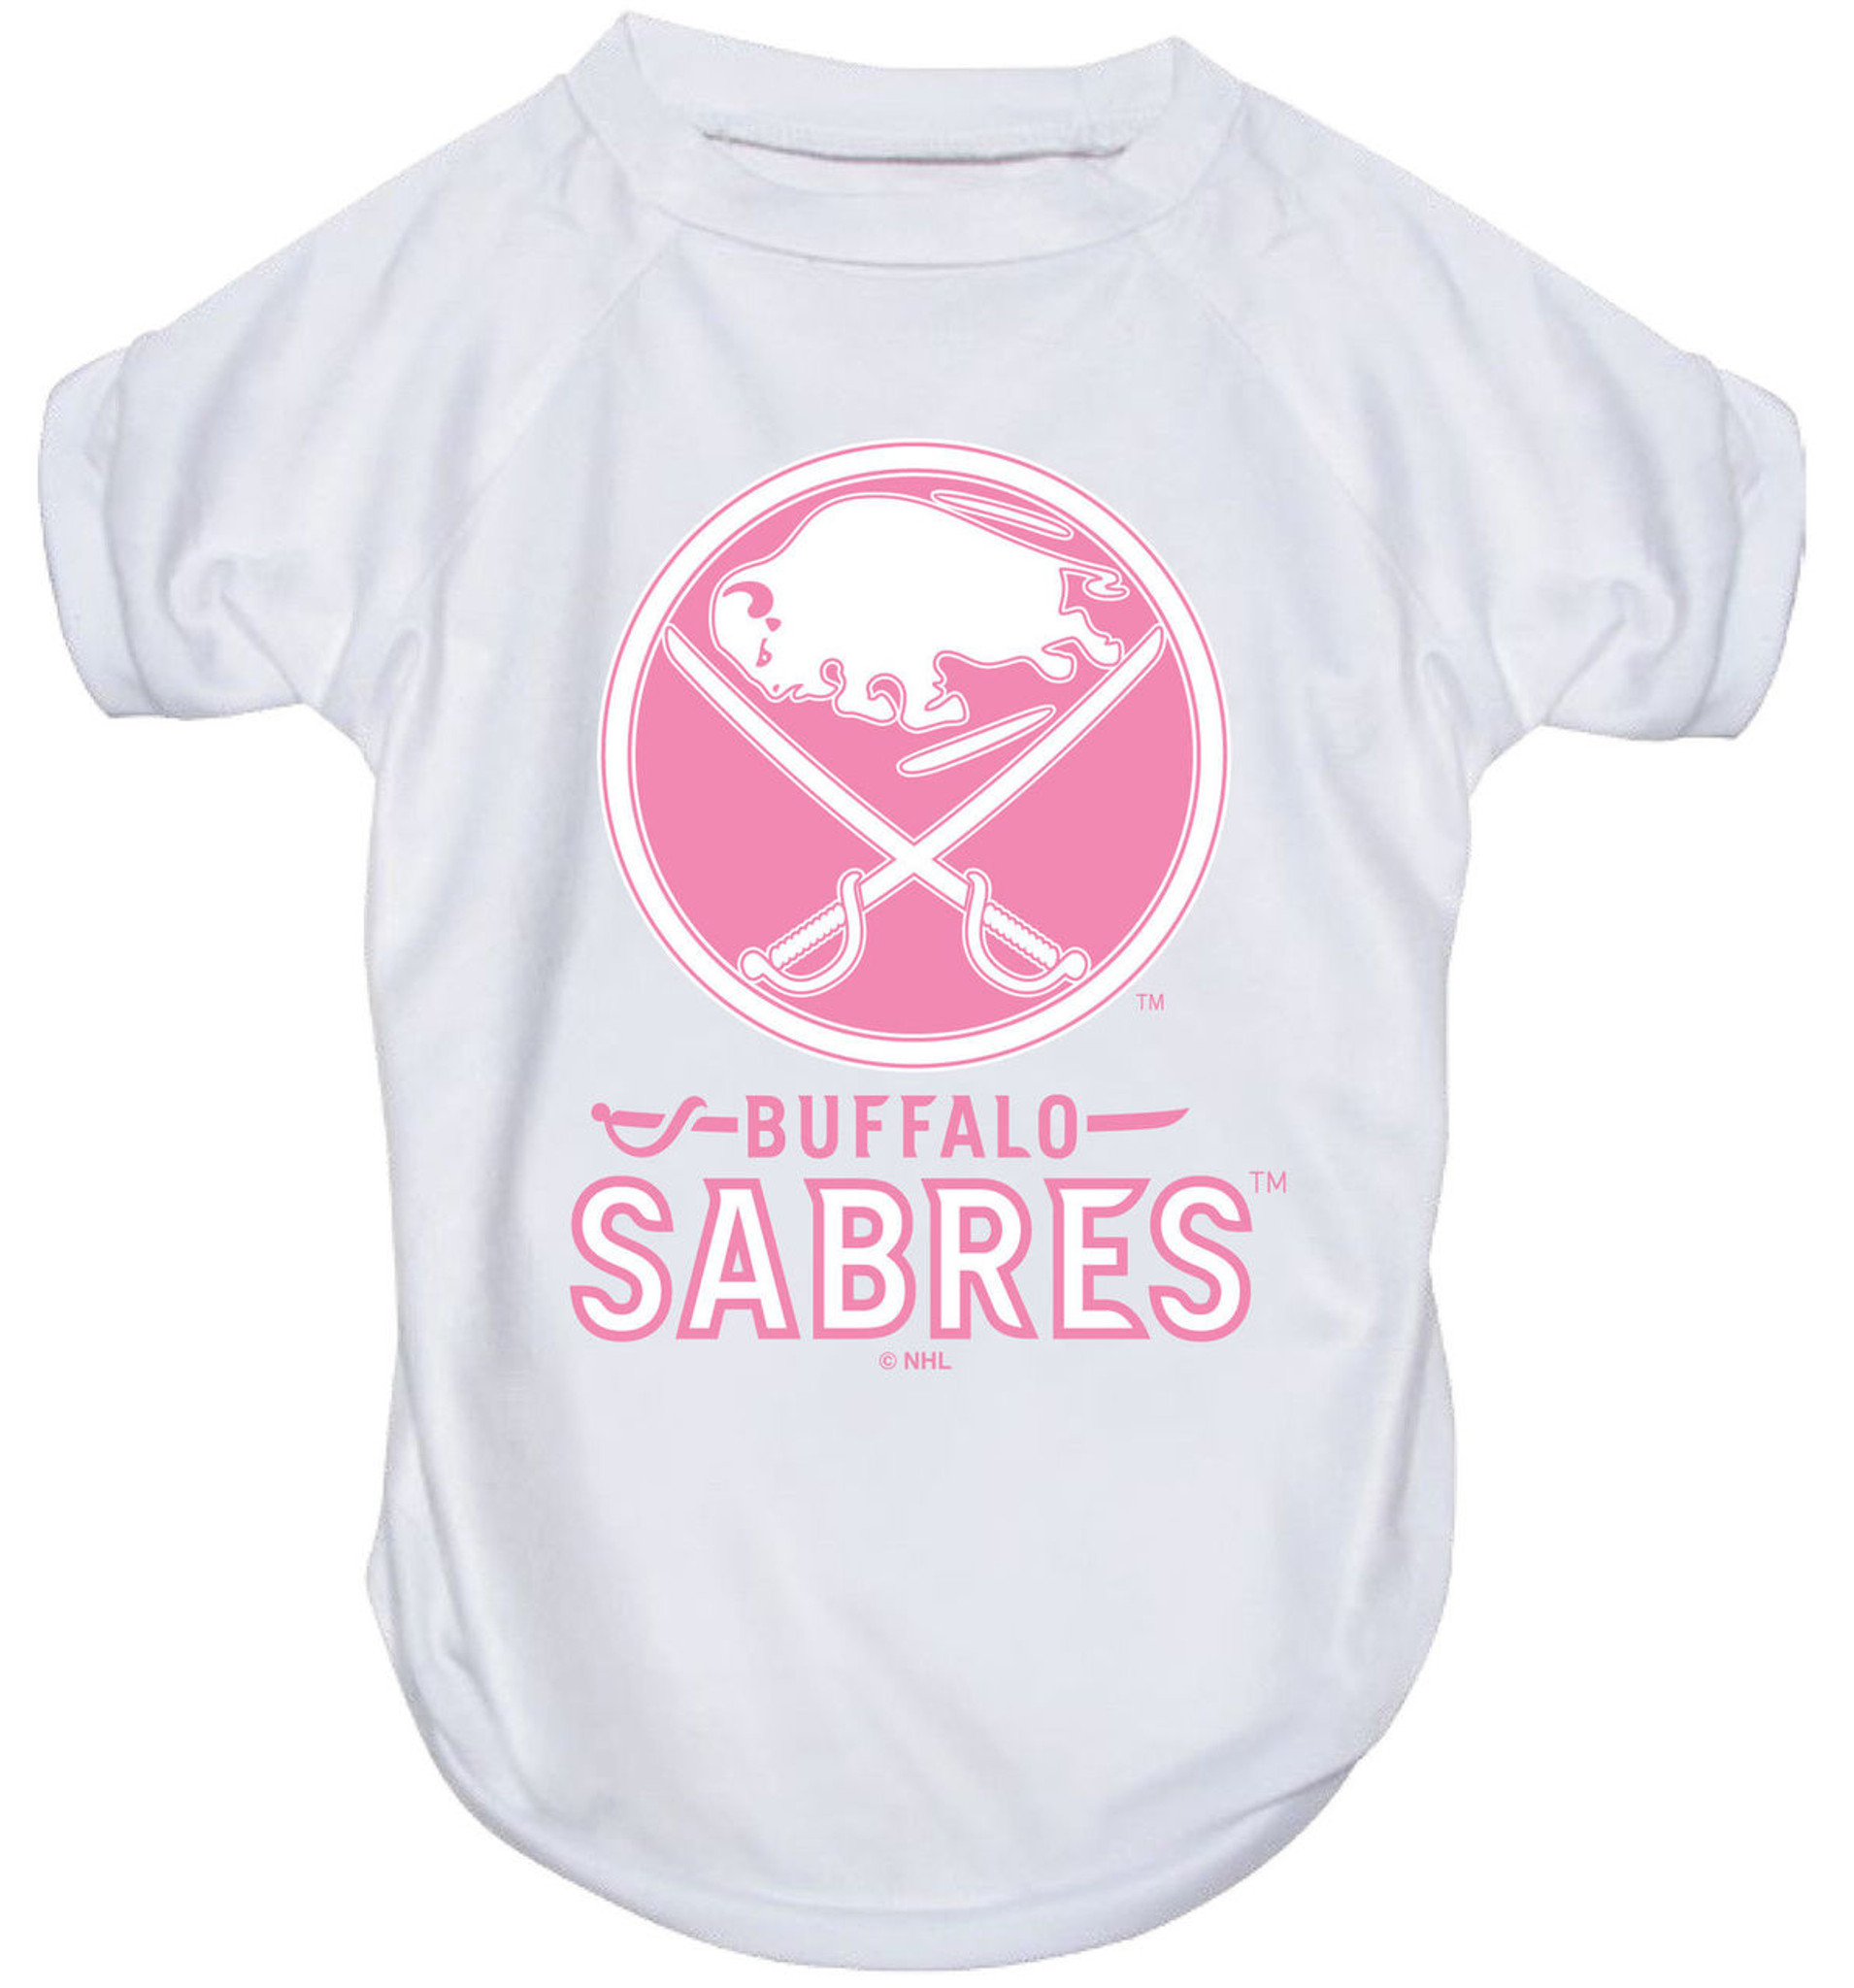 Buffalo Sabres Baby 